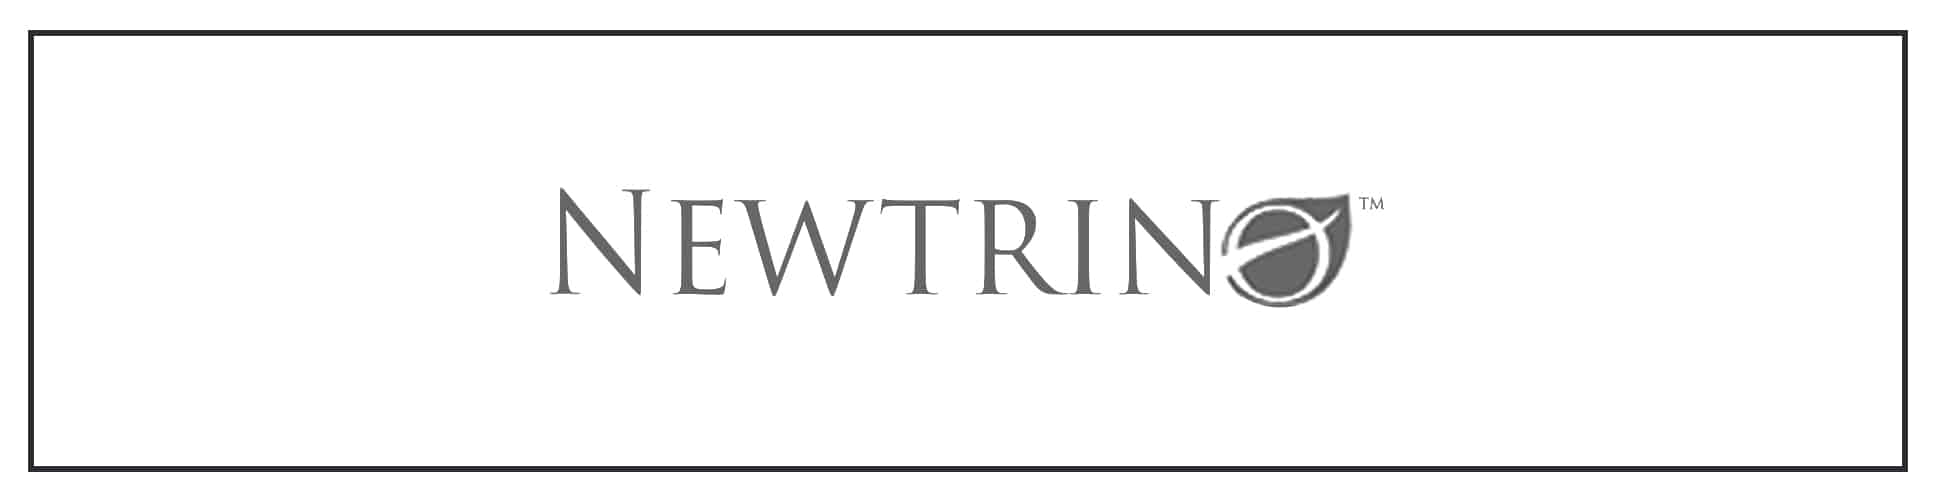 The logo for newtrino on a white background.